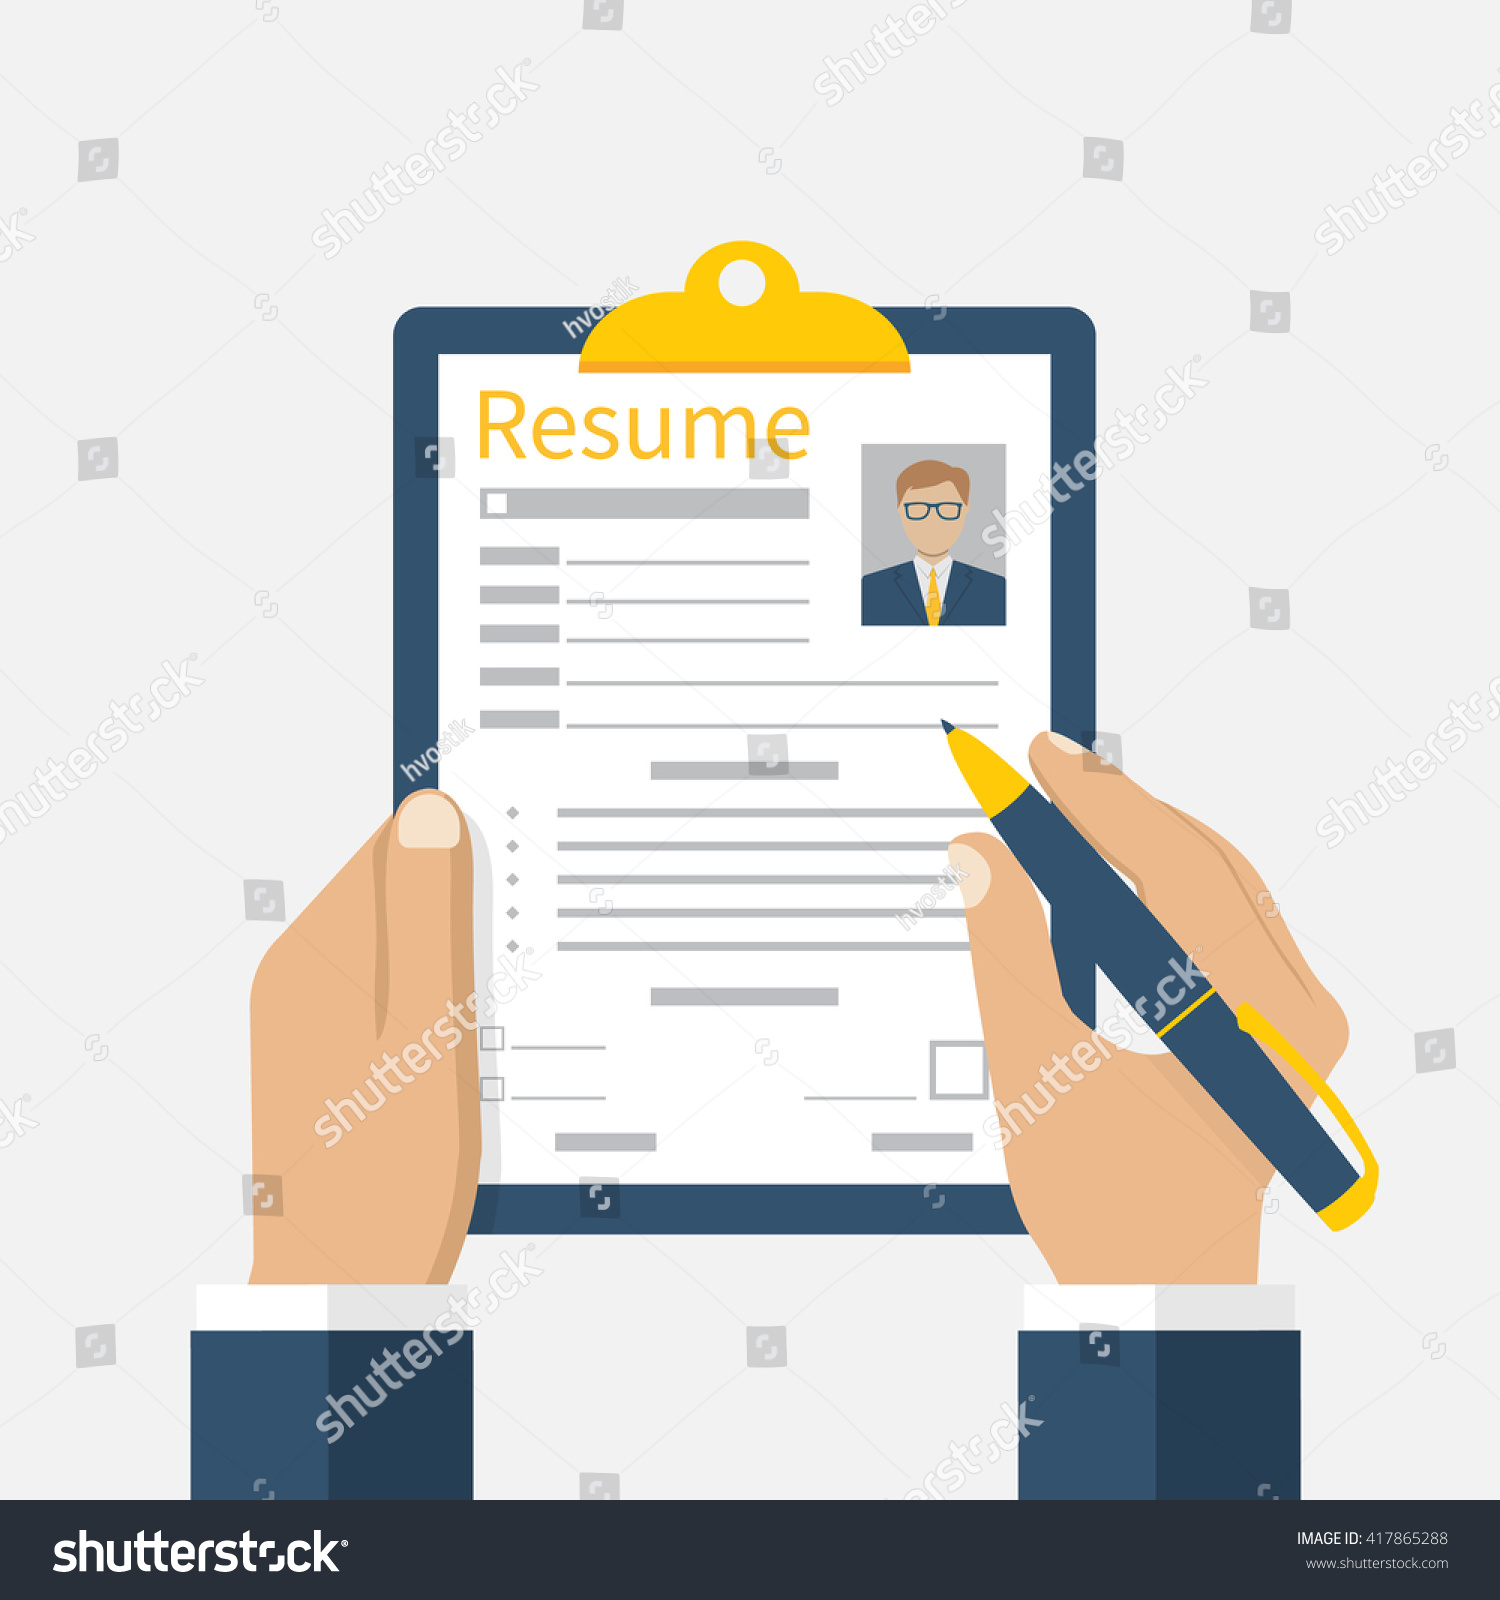 resume form hands clipboard leaf hand stock vector 417865288